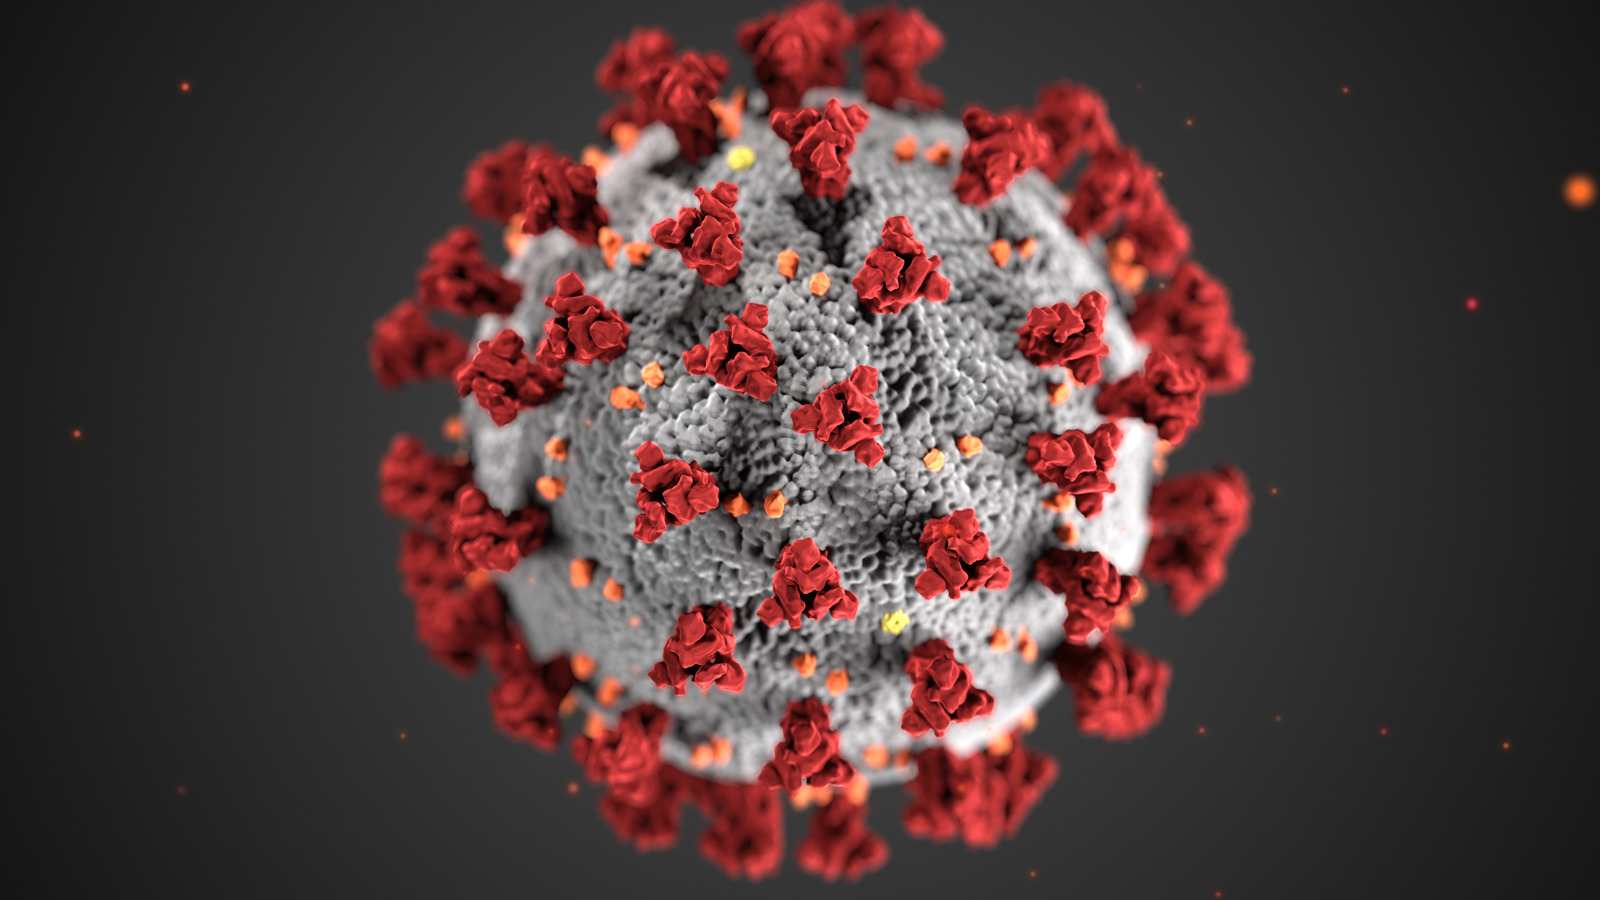 Artist depiction of Covid-19 virus